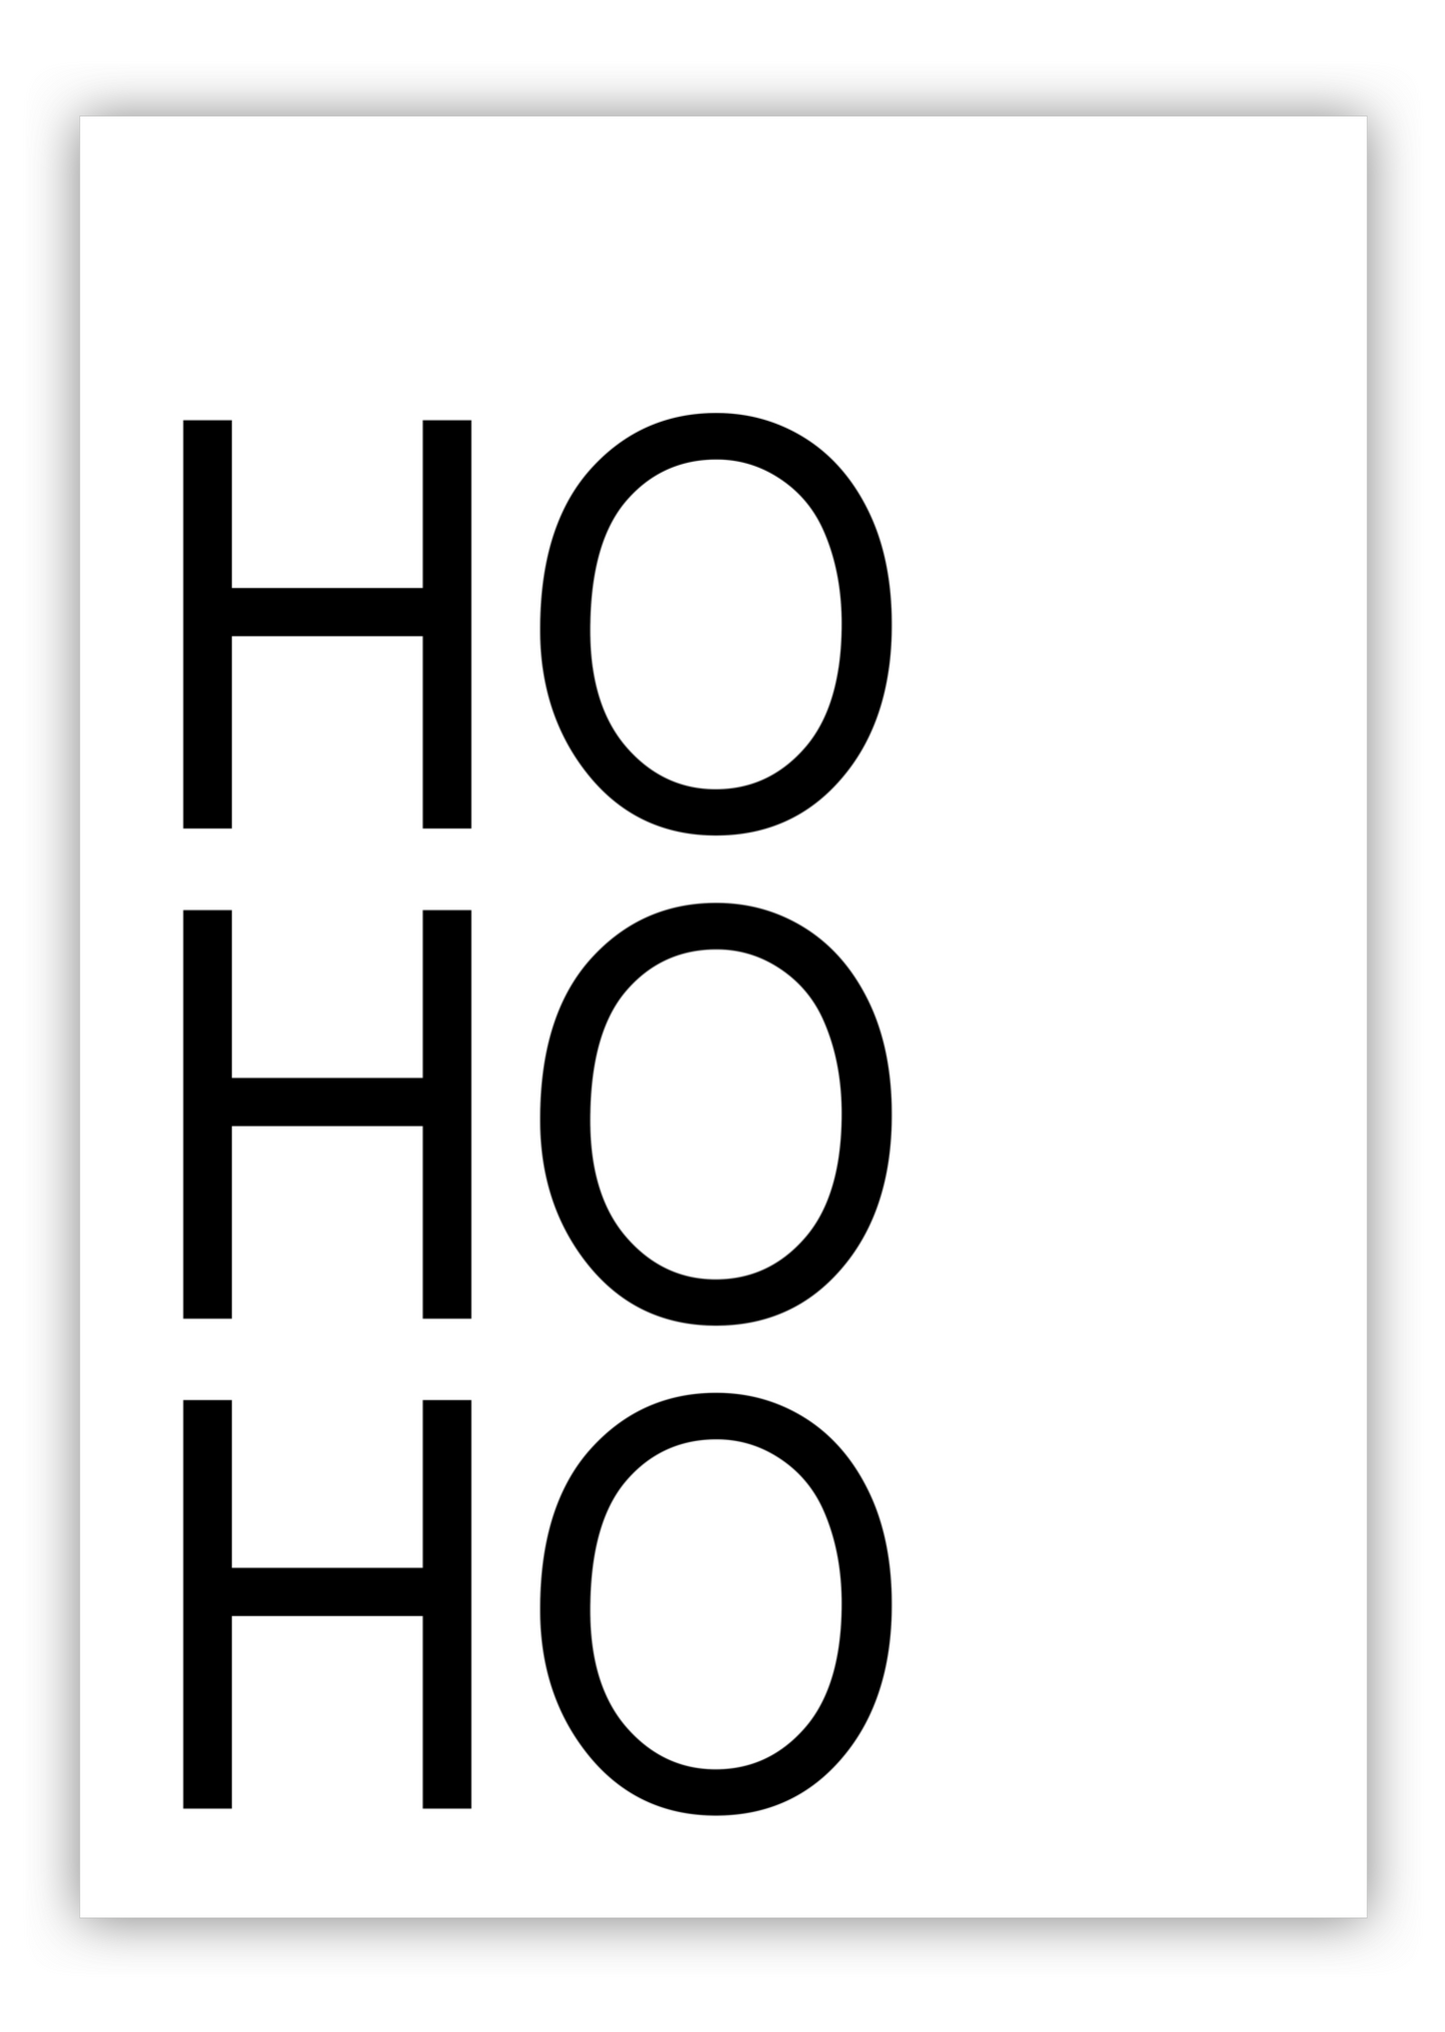 huisjevansanne kerstposter zwart wit met tekst ho ho ho